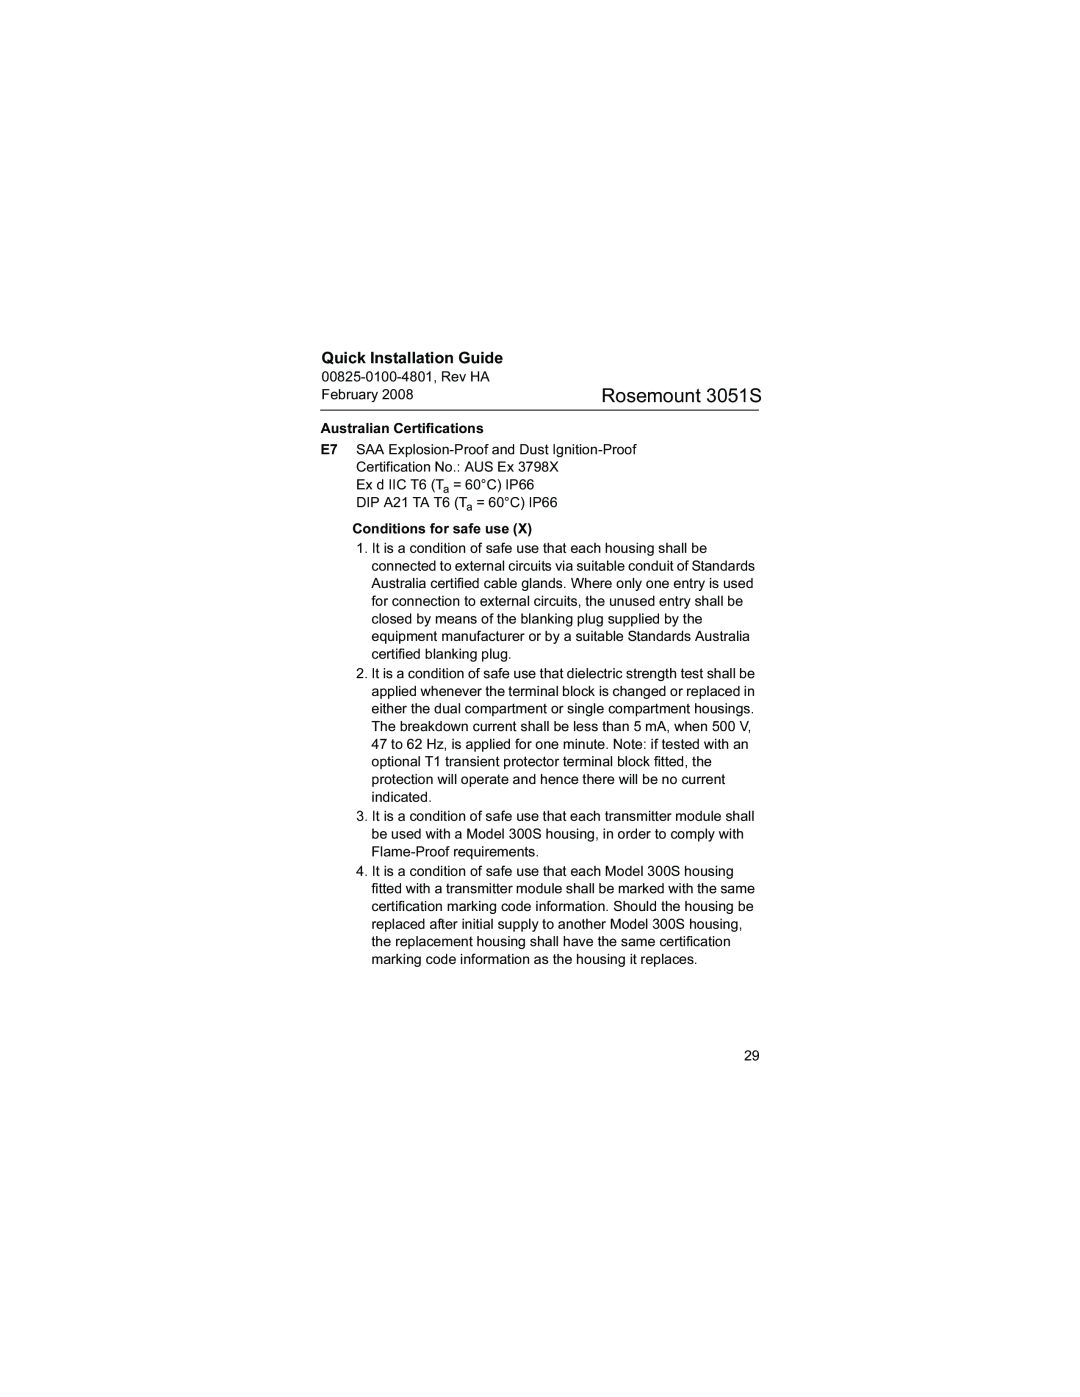 Emerson manual Rosemount 3051S, Quick Installation Guide 